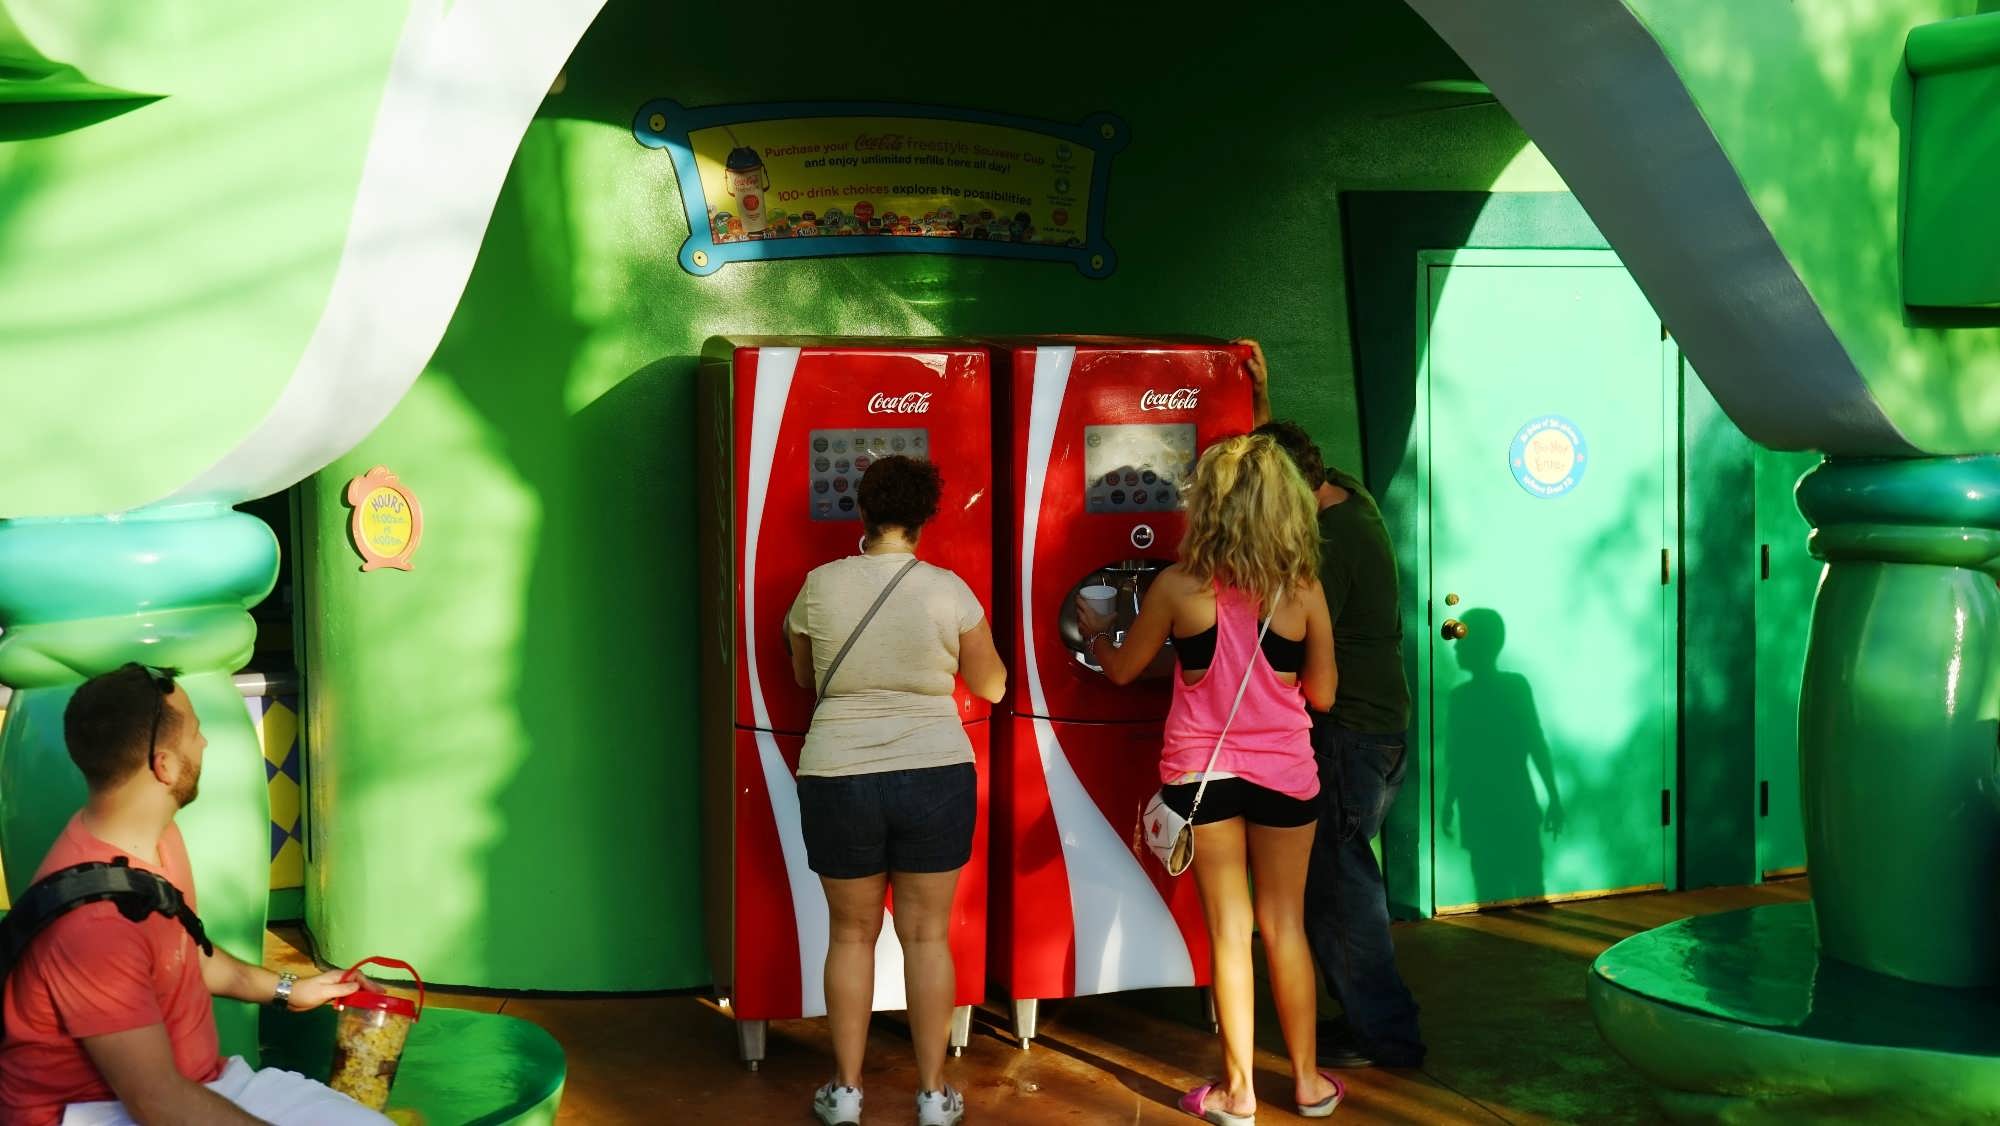 Coke Freestyle station at IOA’s Seuss Landing